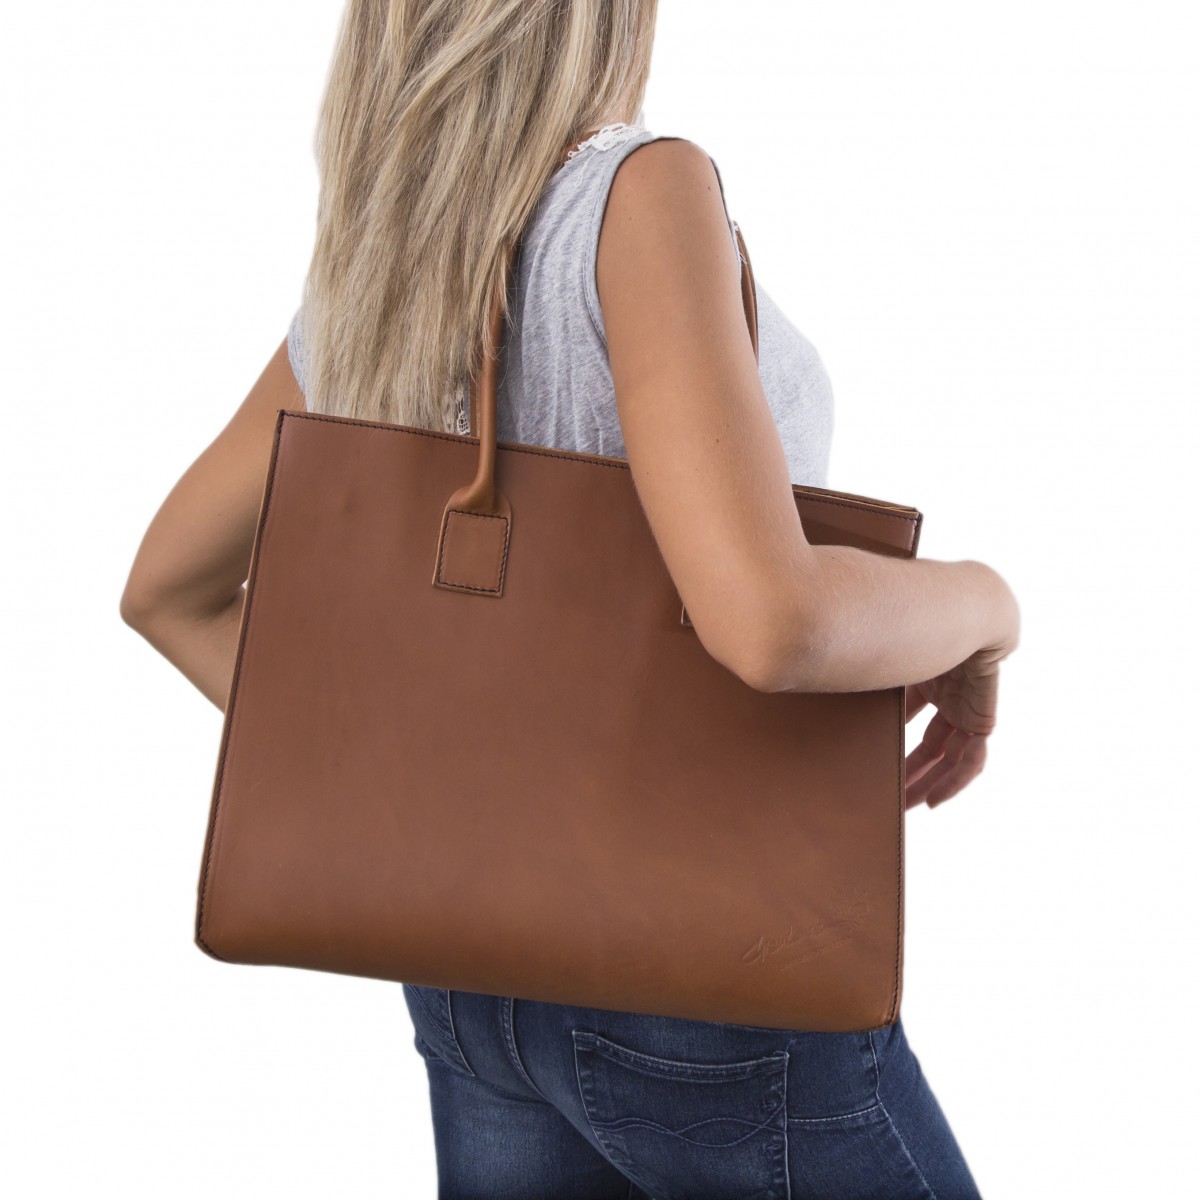 Handmade tote bag for women in tan leather - Gianluca ...